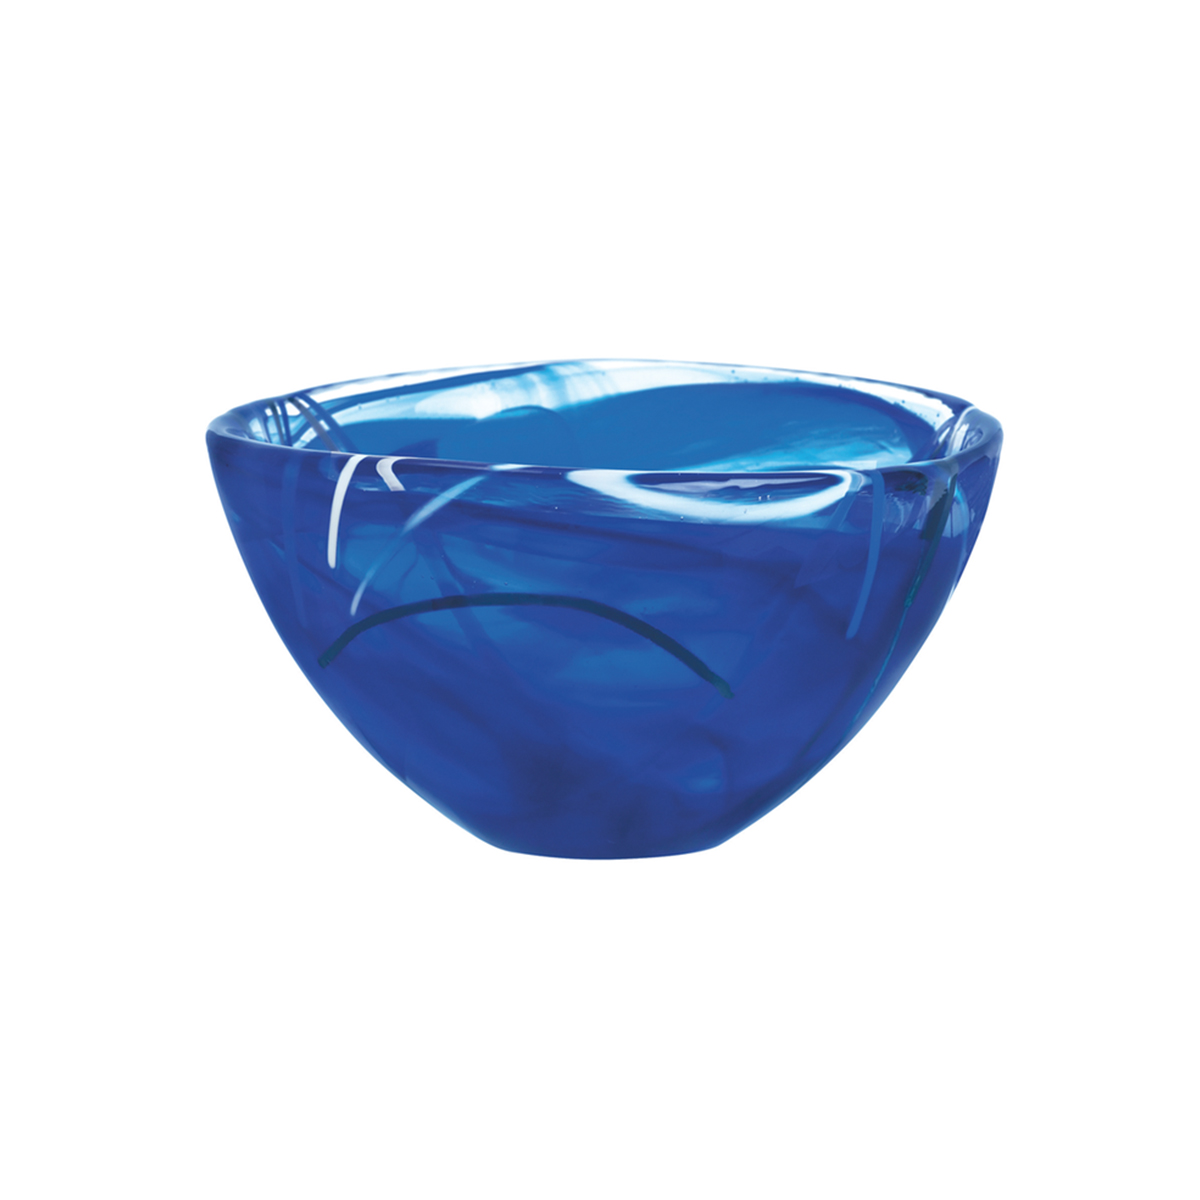 Contrast Cobalt Blue Bowl